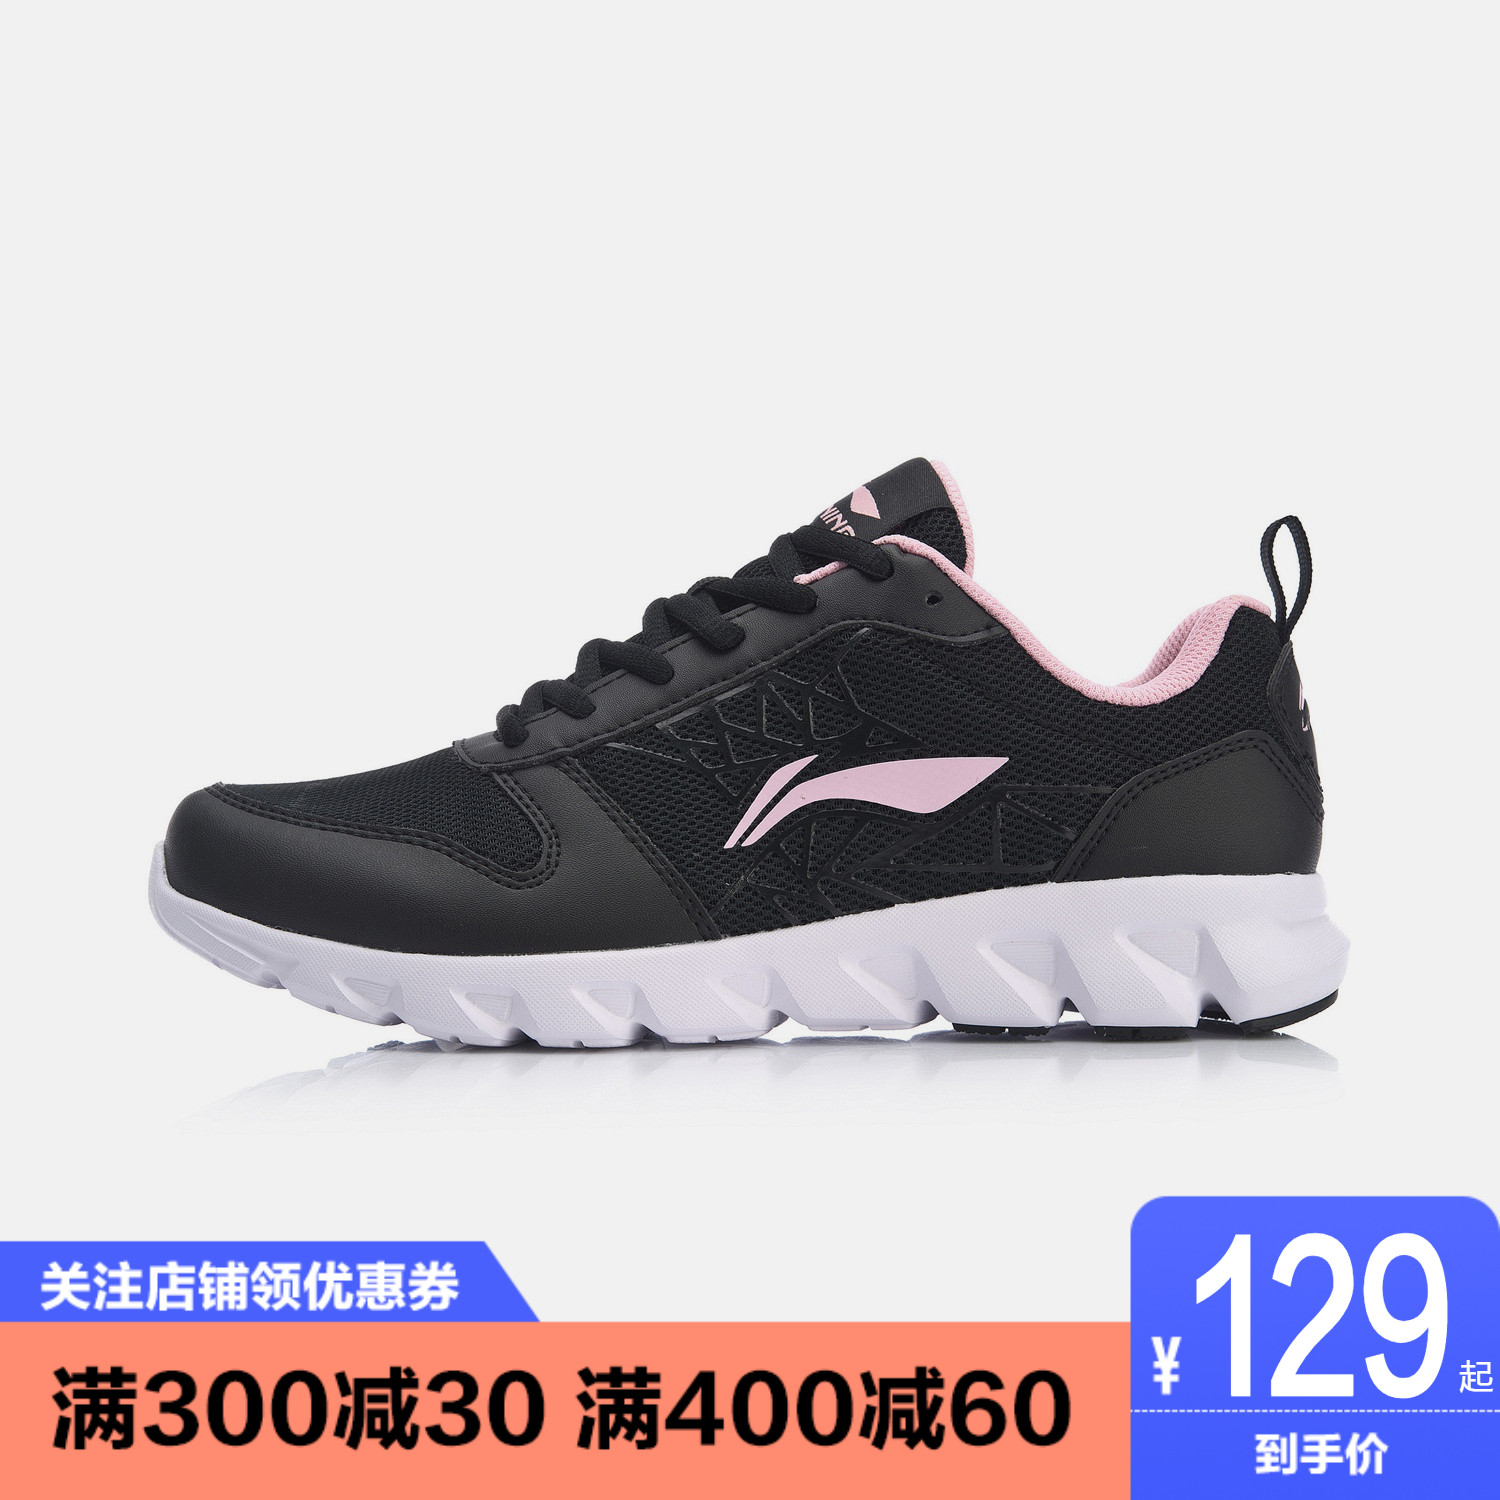 Li Ning Women's Shoes 2019 Autumn/Winter New Lightweight Shock Absorbing Running Shoes Casual Shoes Sports Shoes ARHN206-2